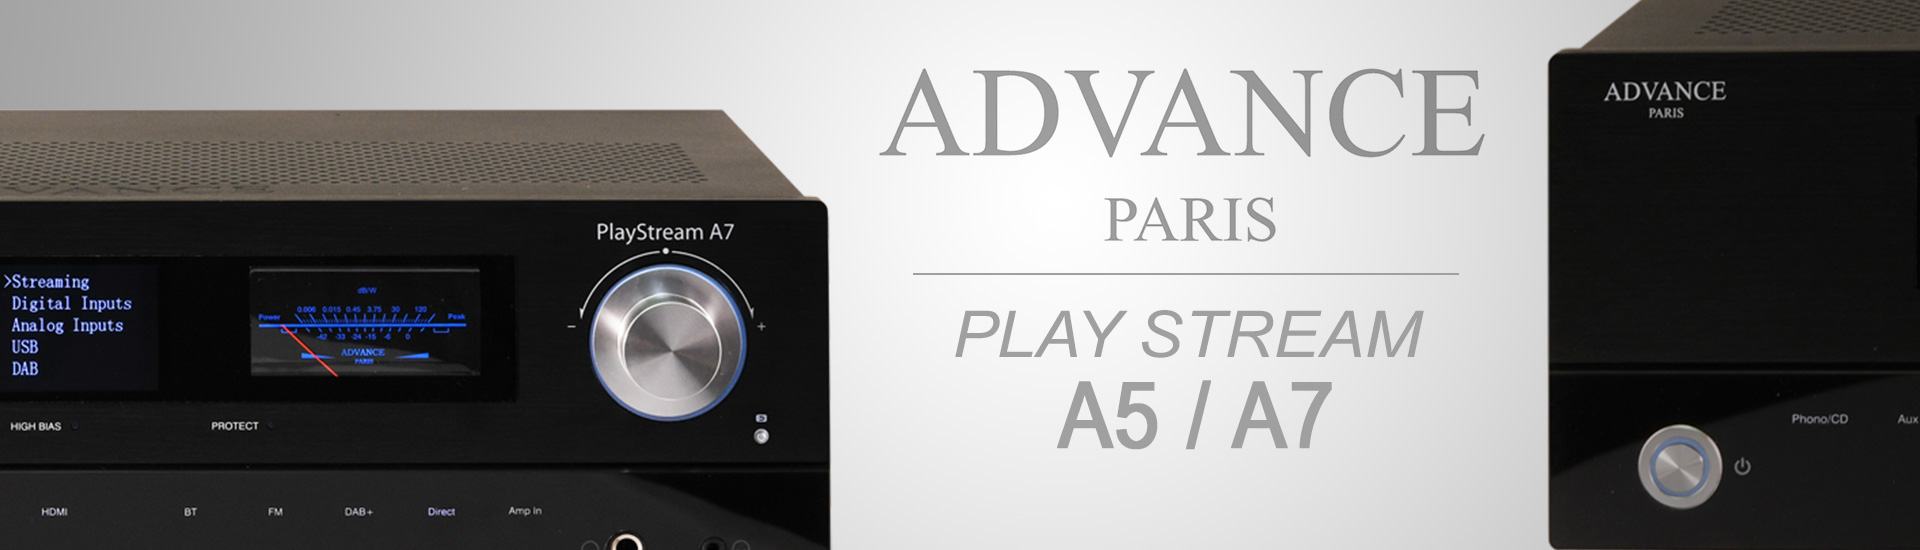 Advance Paris PlayStream A57